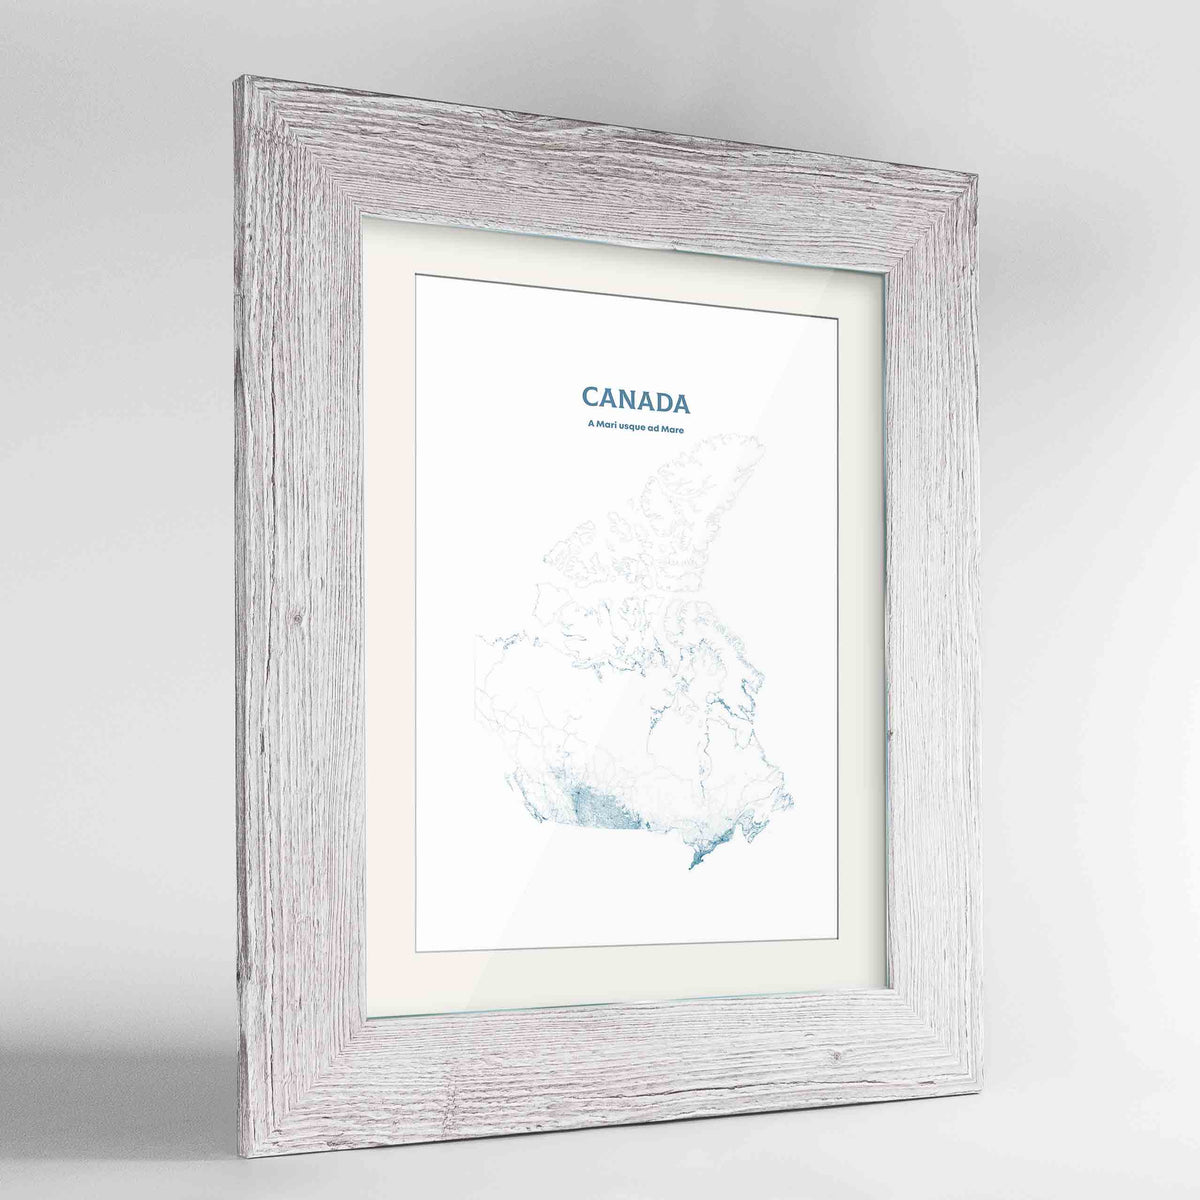 Canada - All Roads Art Print - Framed